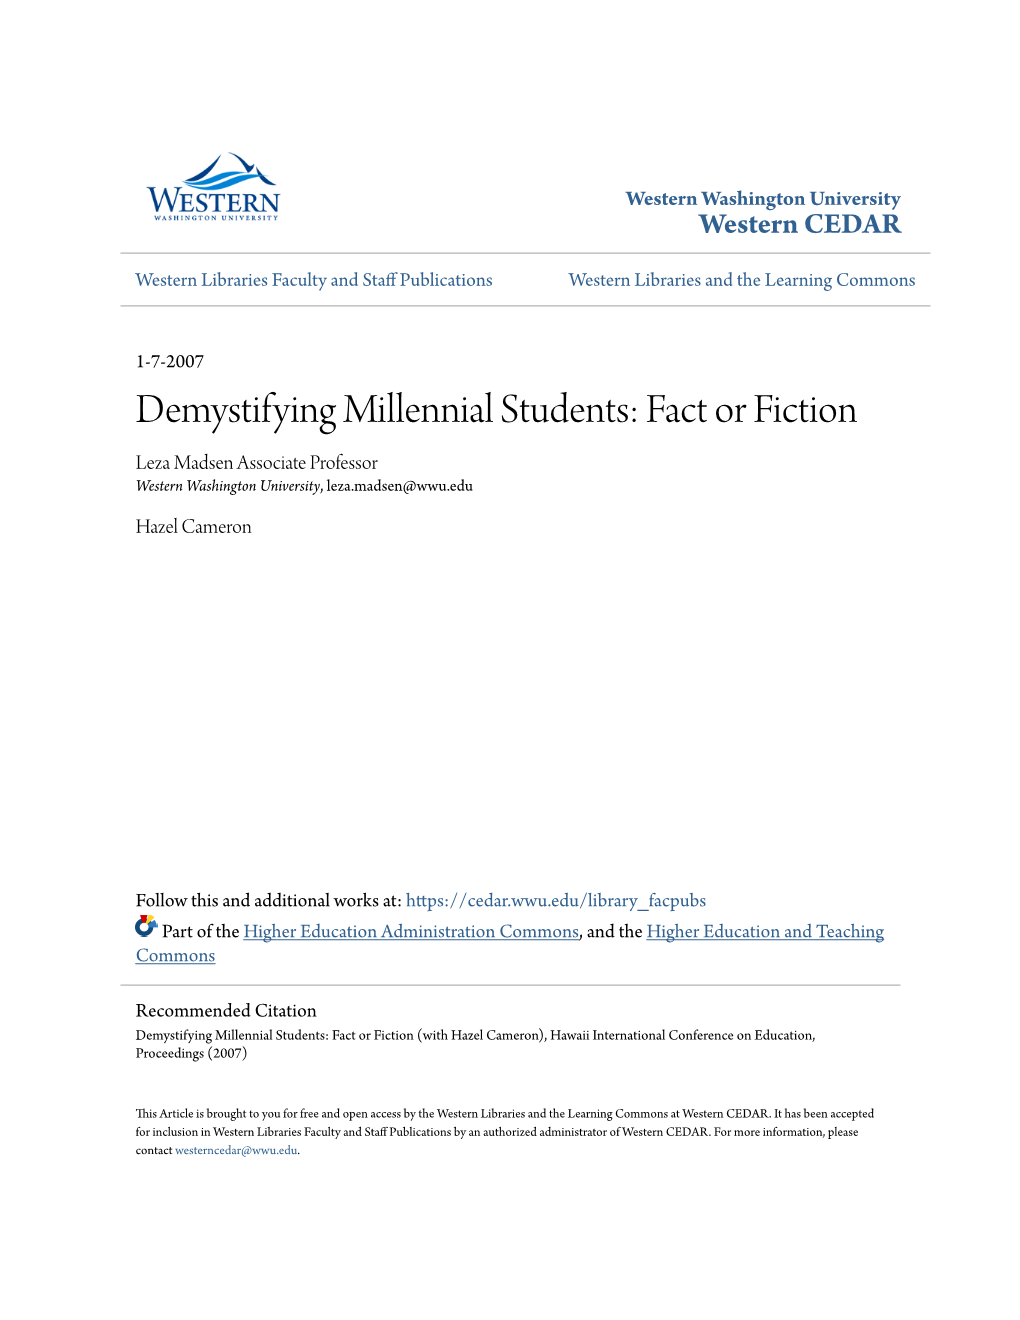 Demystifying Millennial Students: Fact Or Fiction Leza Madsen Associate Professor Western Washington University, Leza.Madsen@Wwu.Edu